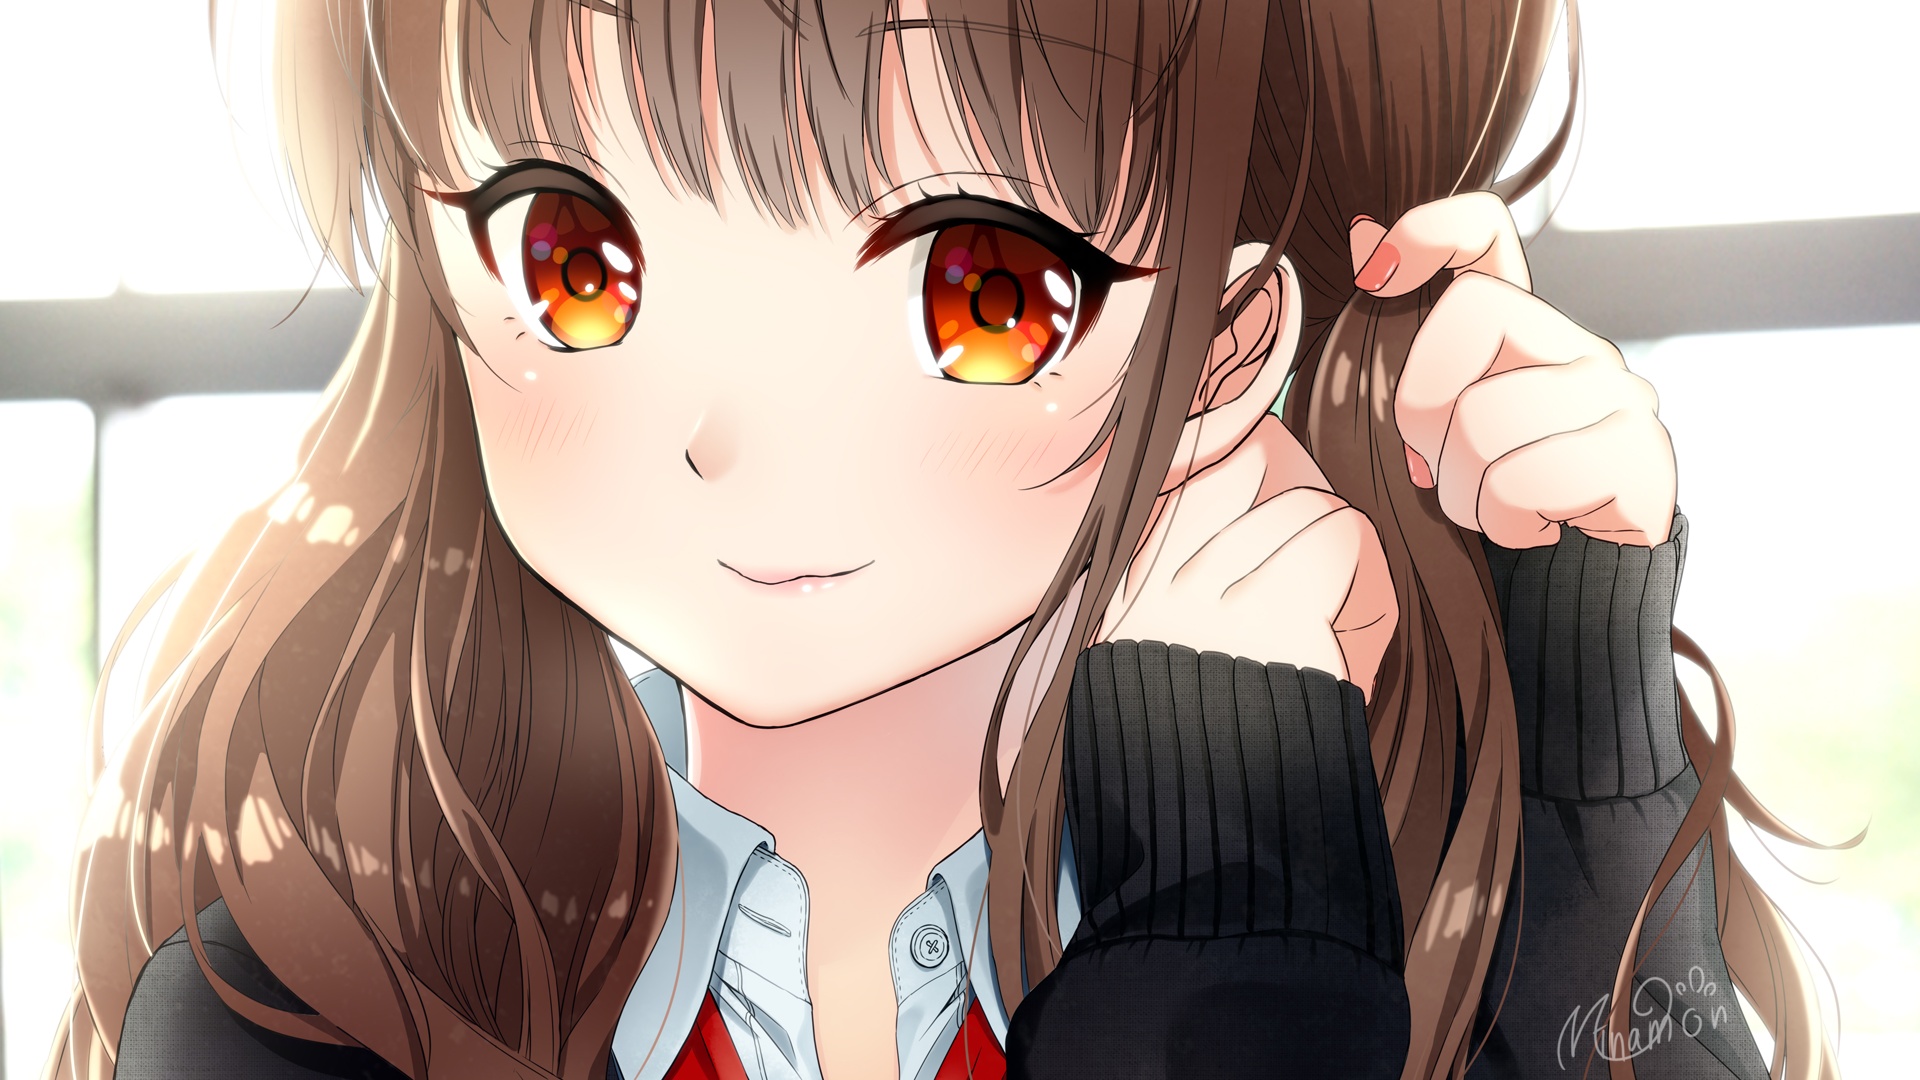 anime girl with brown hair and bangs